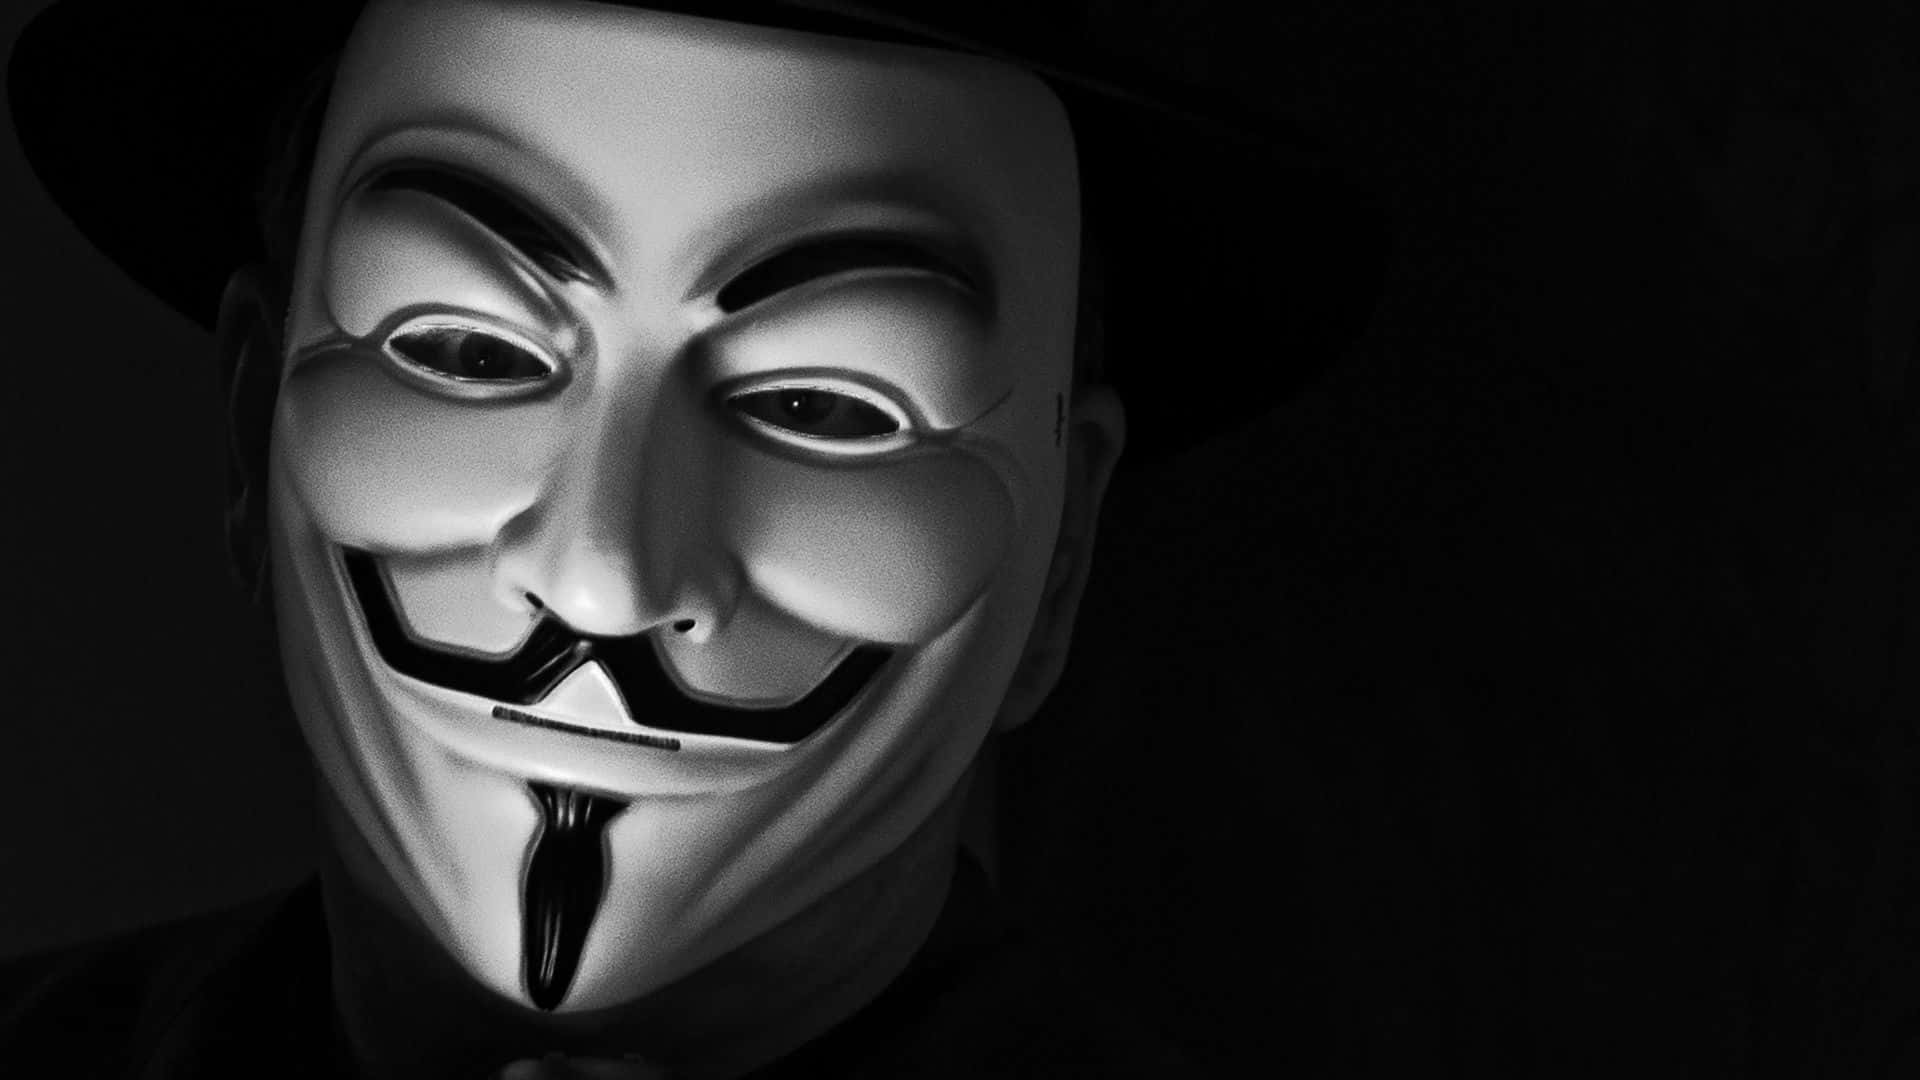 A Man In A Hat And A Mask Is Wearing A V For Vendetta Mask